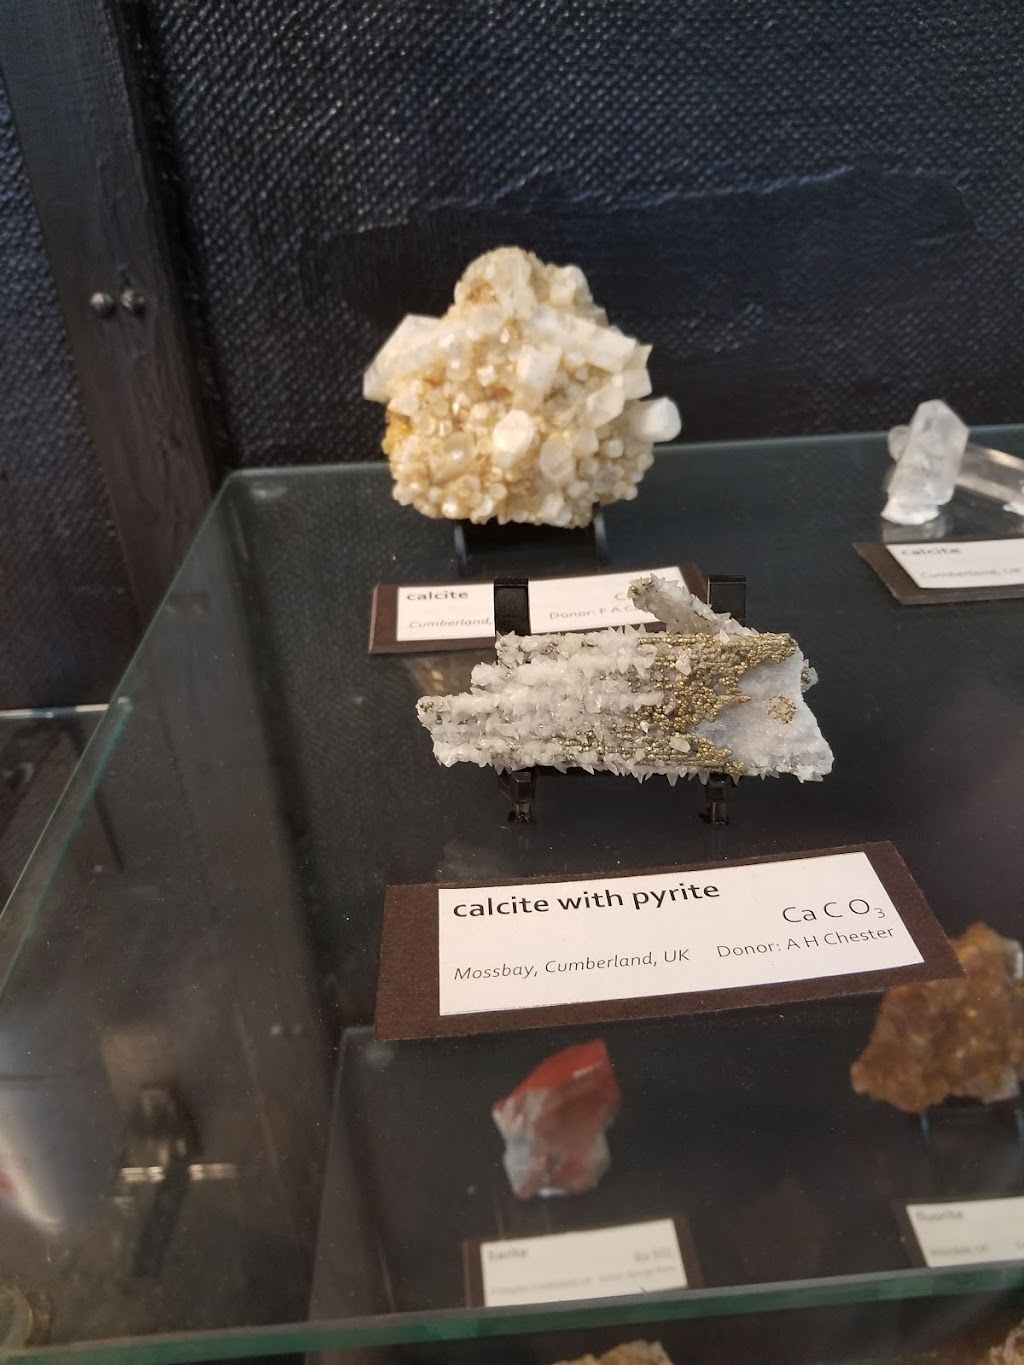 Rutgers Geology Museum | Geology Hall, 85 Somerset St, New Brunswick, NJ 08901, USA | Phone: (848) 932-7243